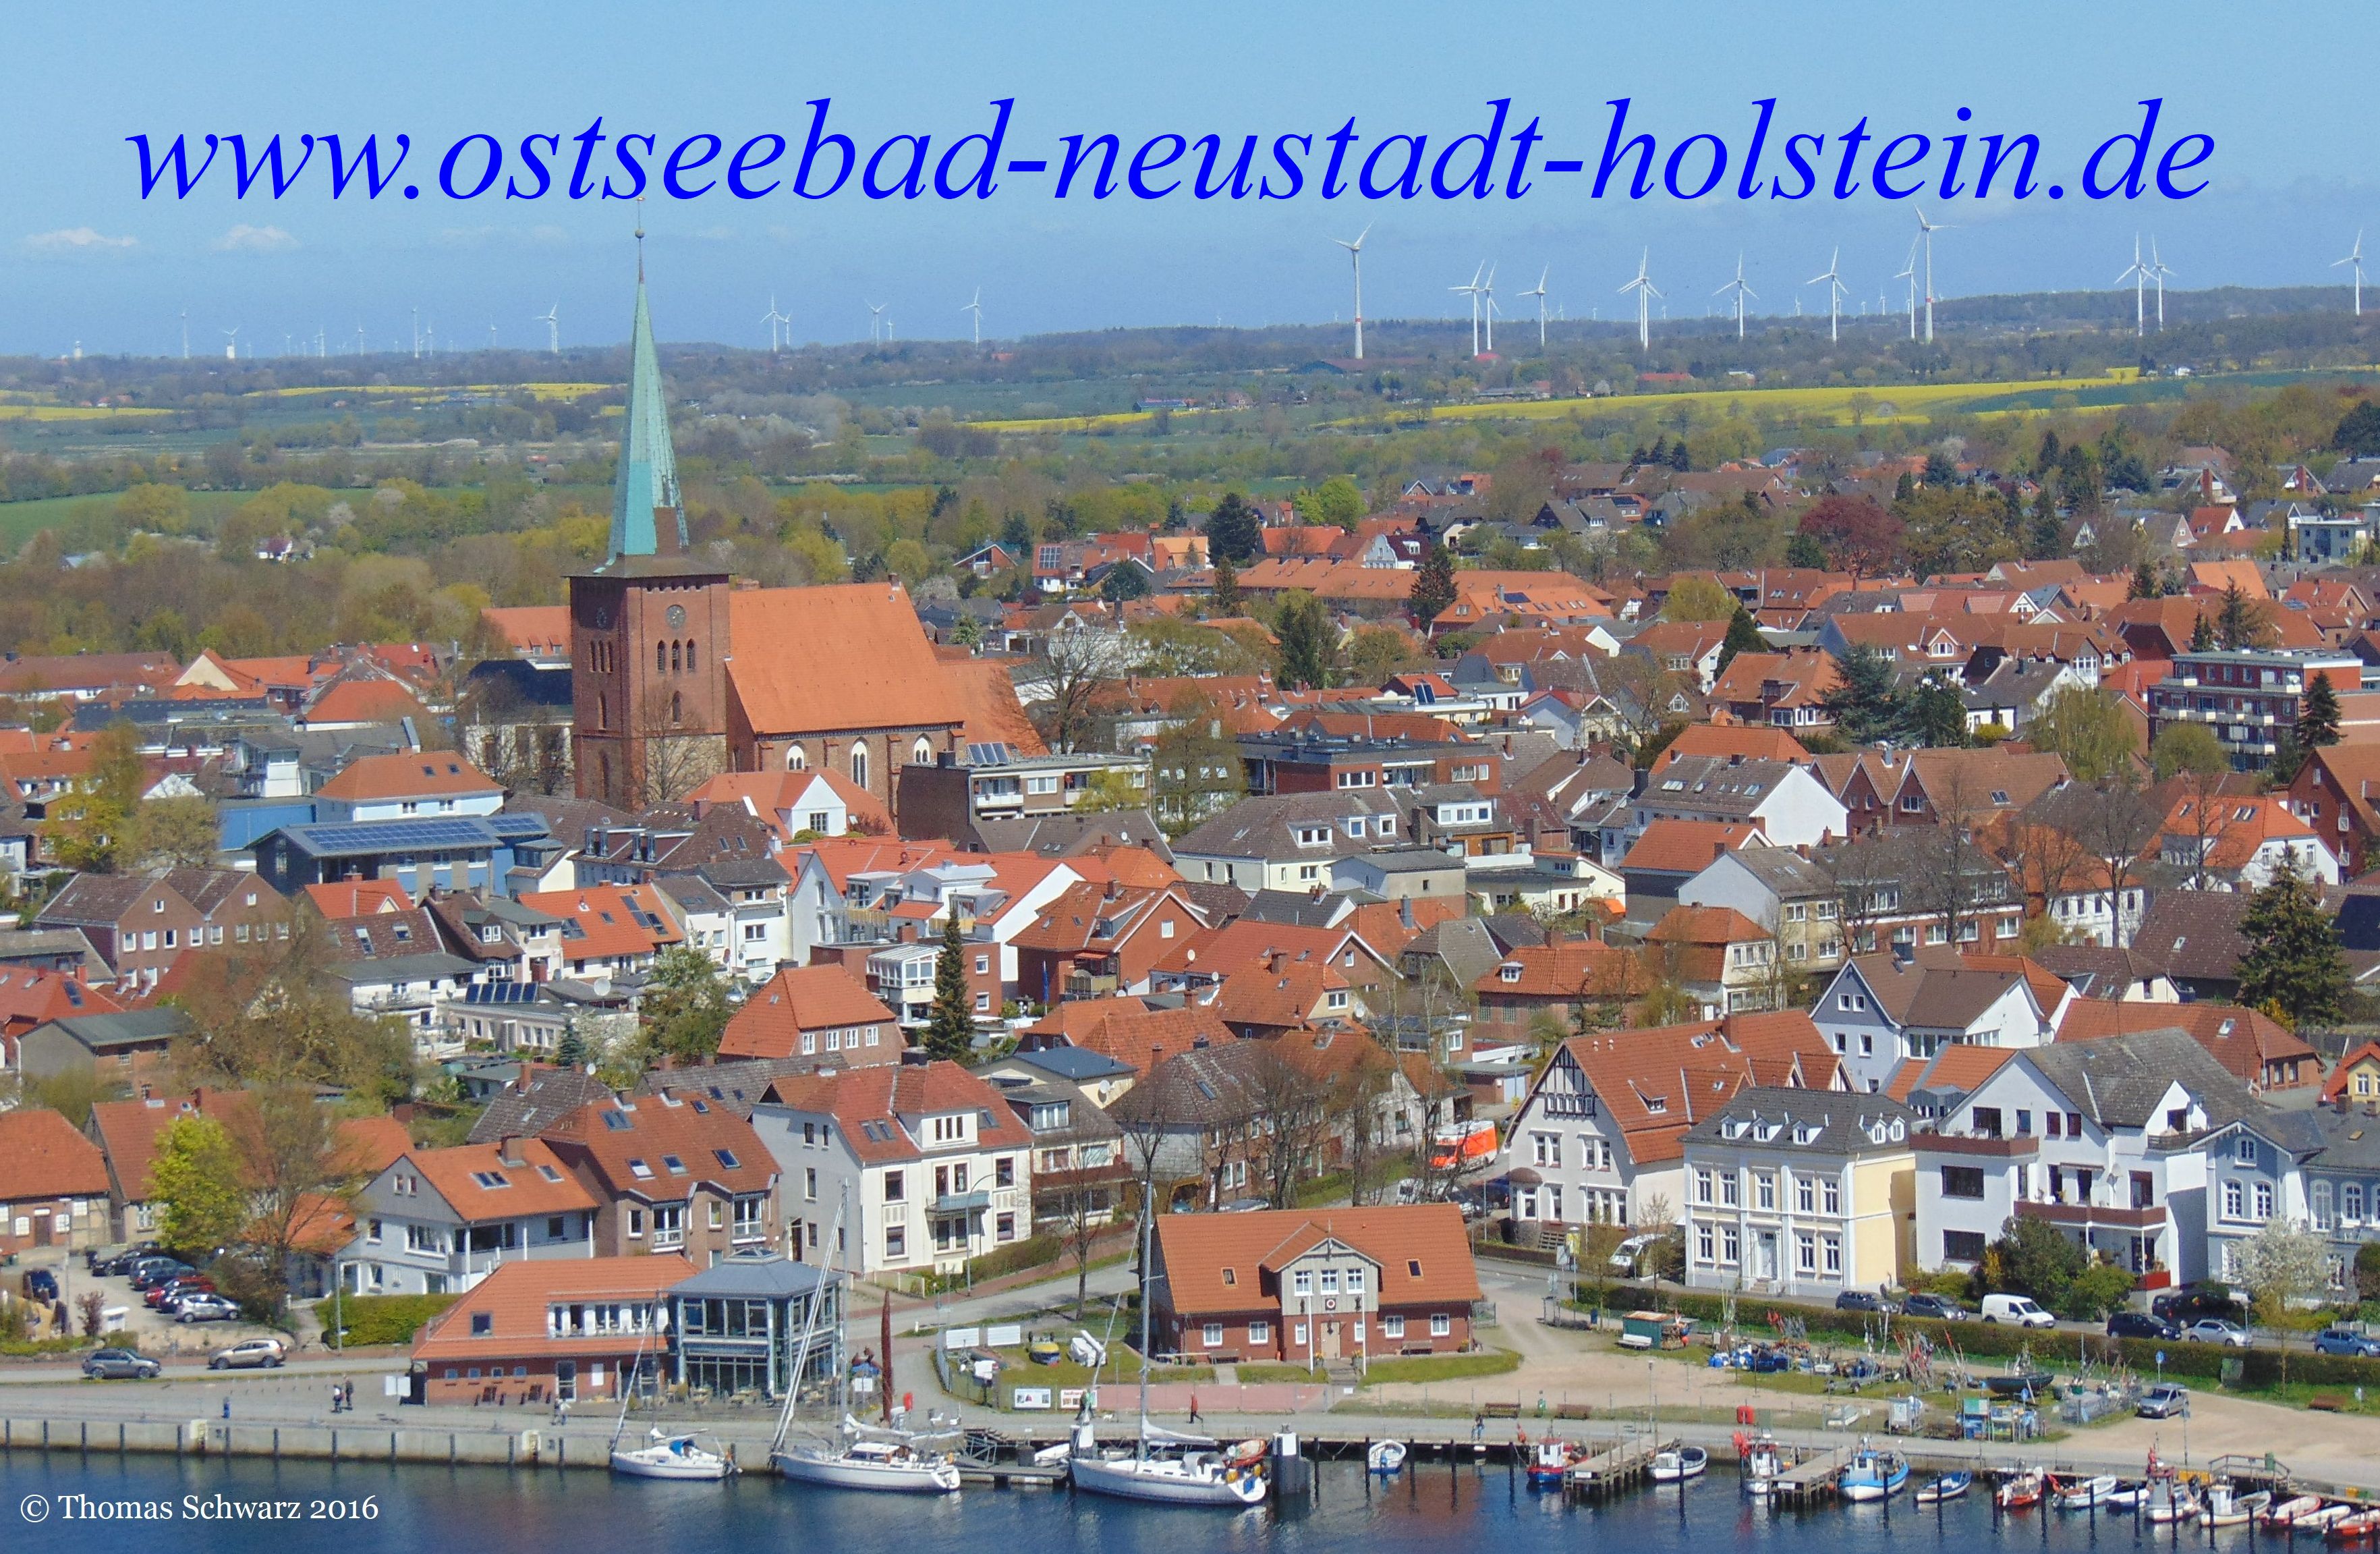 (c) Ostseebad-neustadt-holstein.de